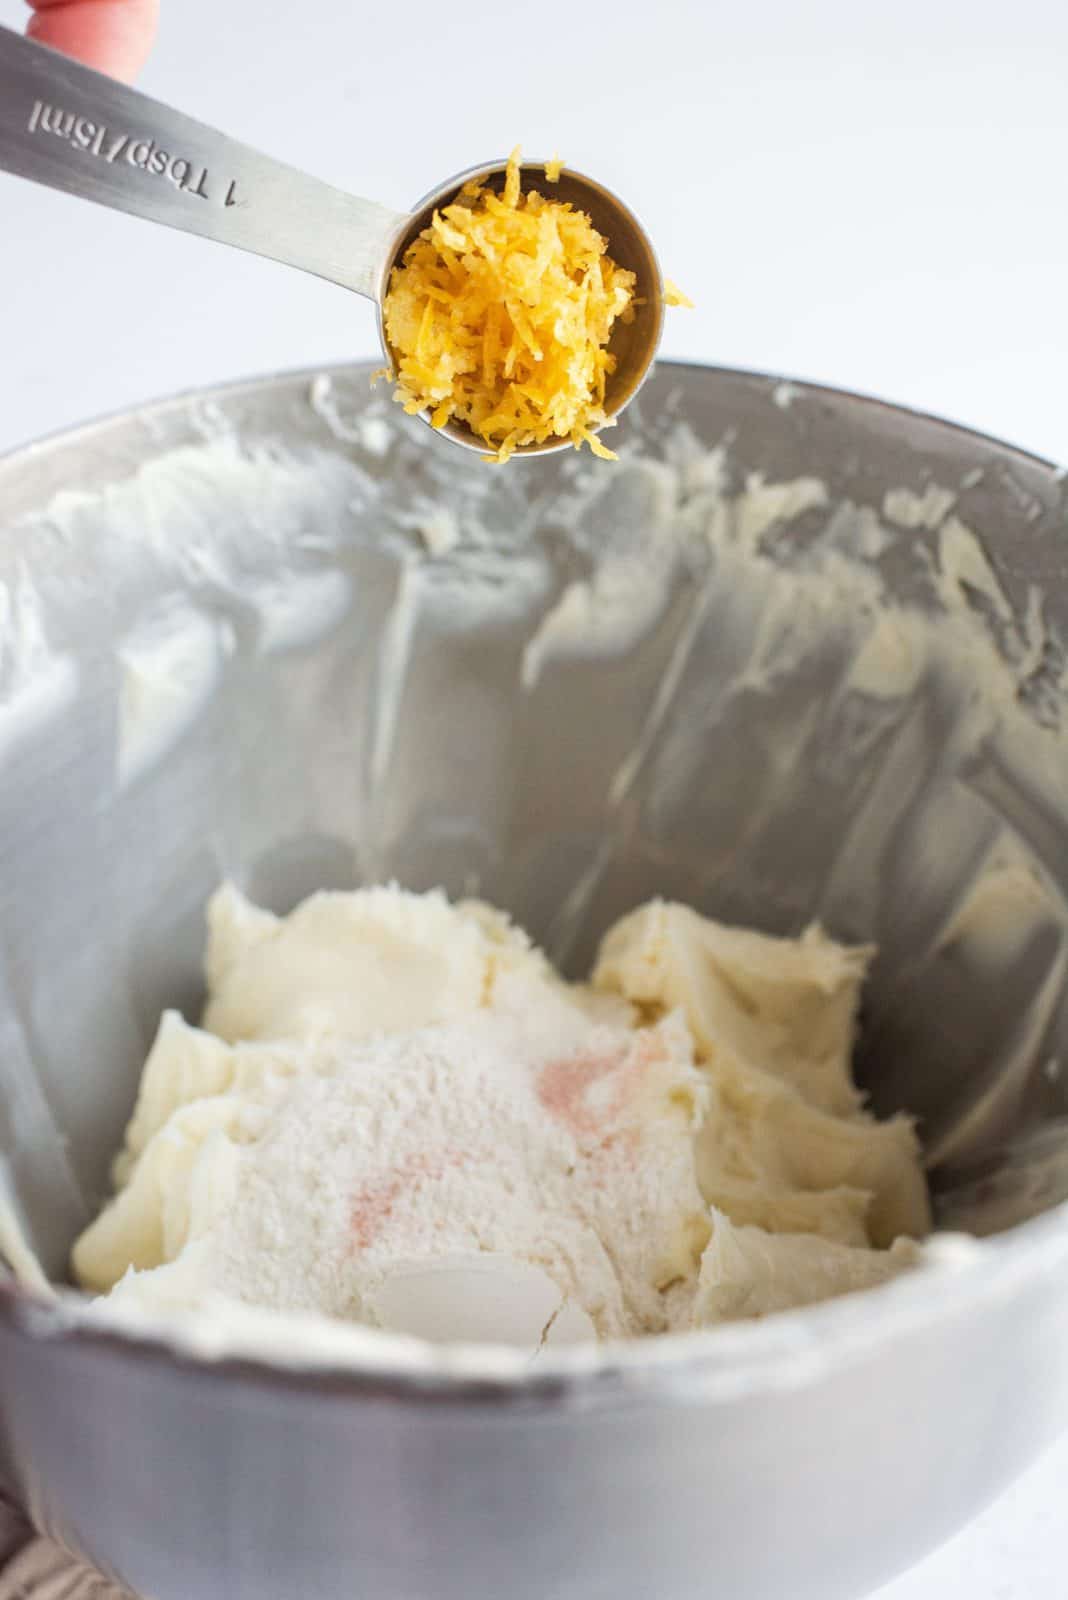 Flour, salt, and lemon zest added to cream cheese mixture.